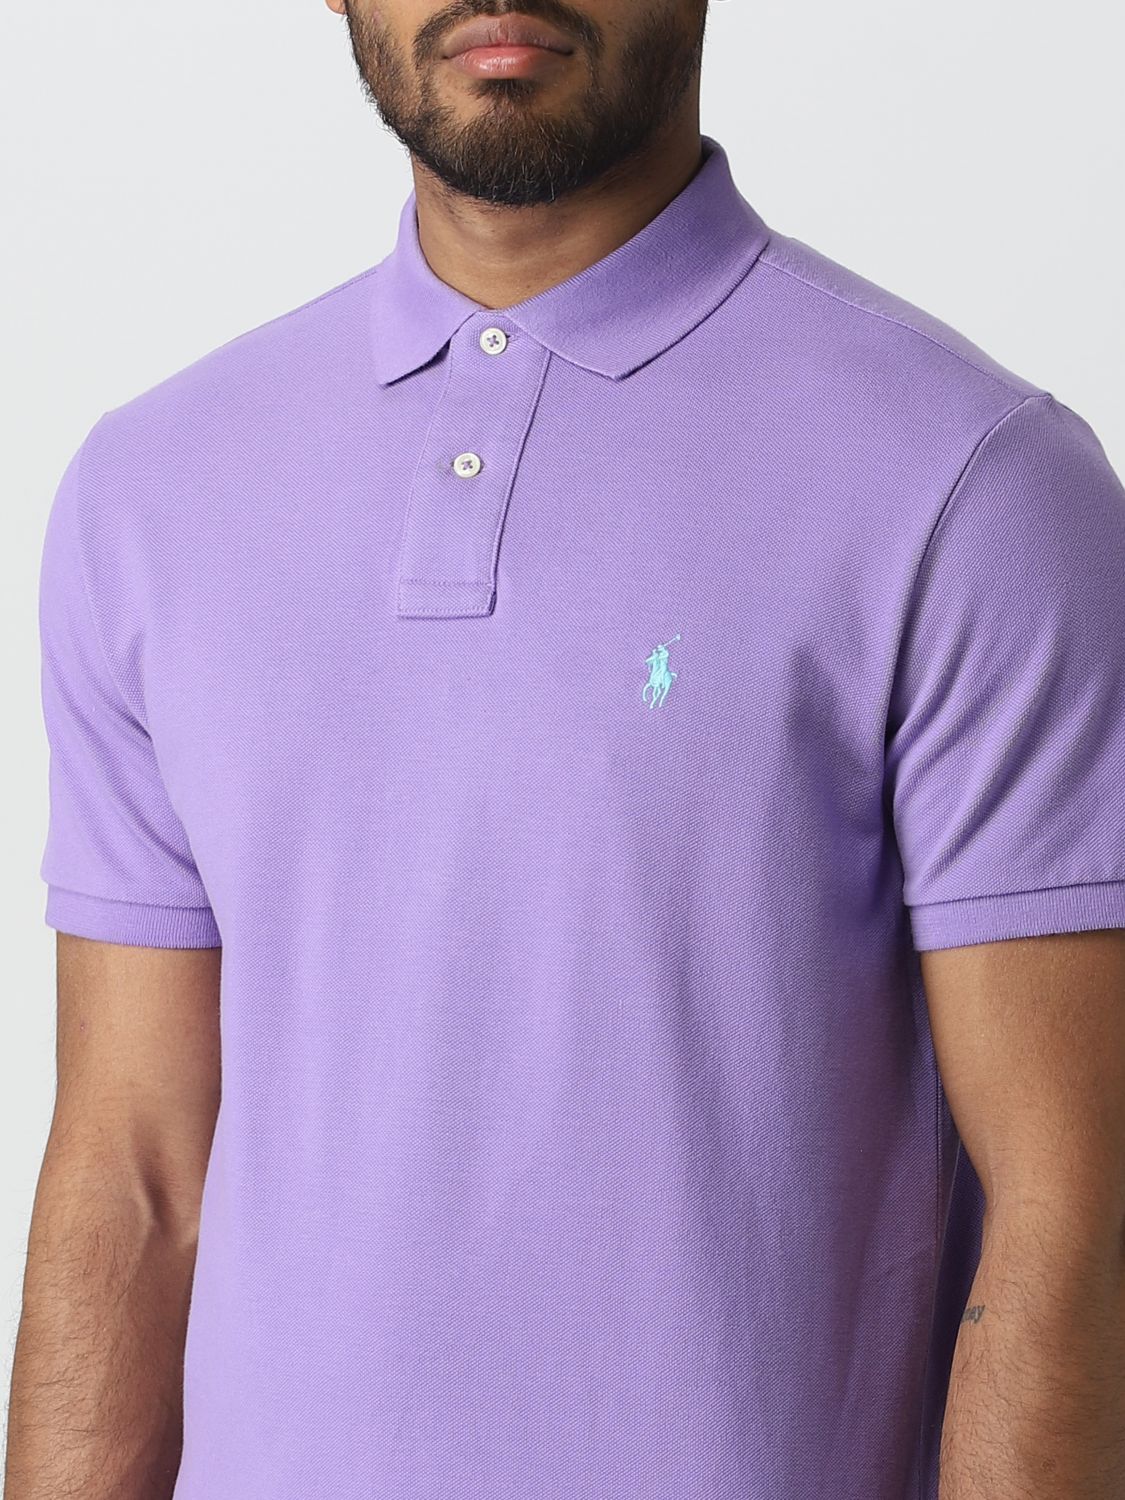 Mooi Fictief ding POLO RALPH LAUREN: polo shirt for man - Violet | Polo Ralph Lauren polo  shirt 710782592 online on GIGLIO.COM